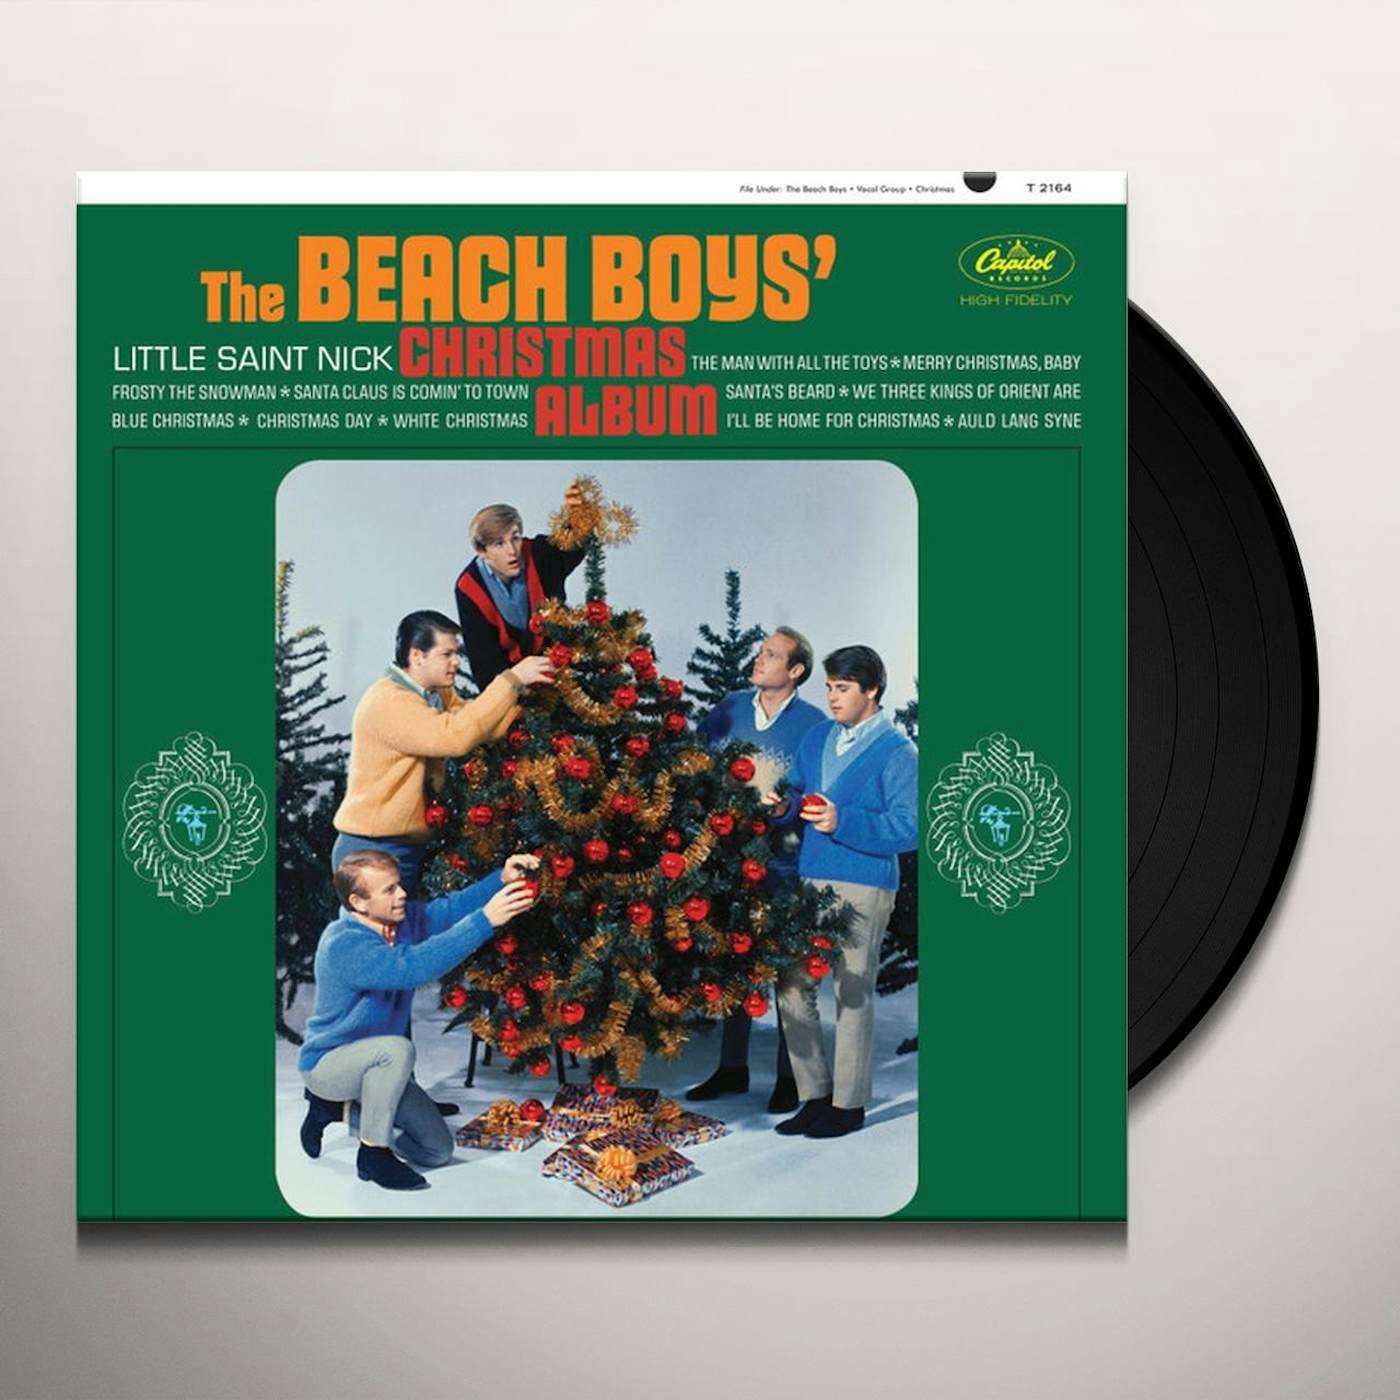 The Beach Boys CHRISTMAS ALBUM Vinyl Record